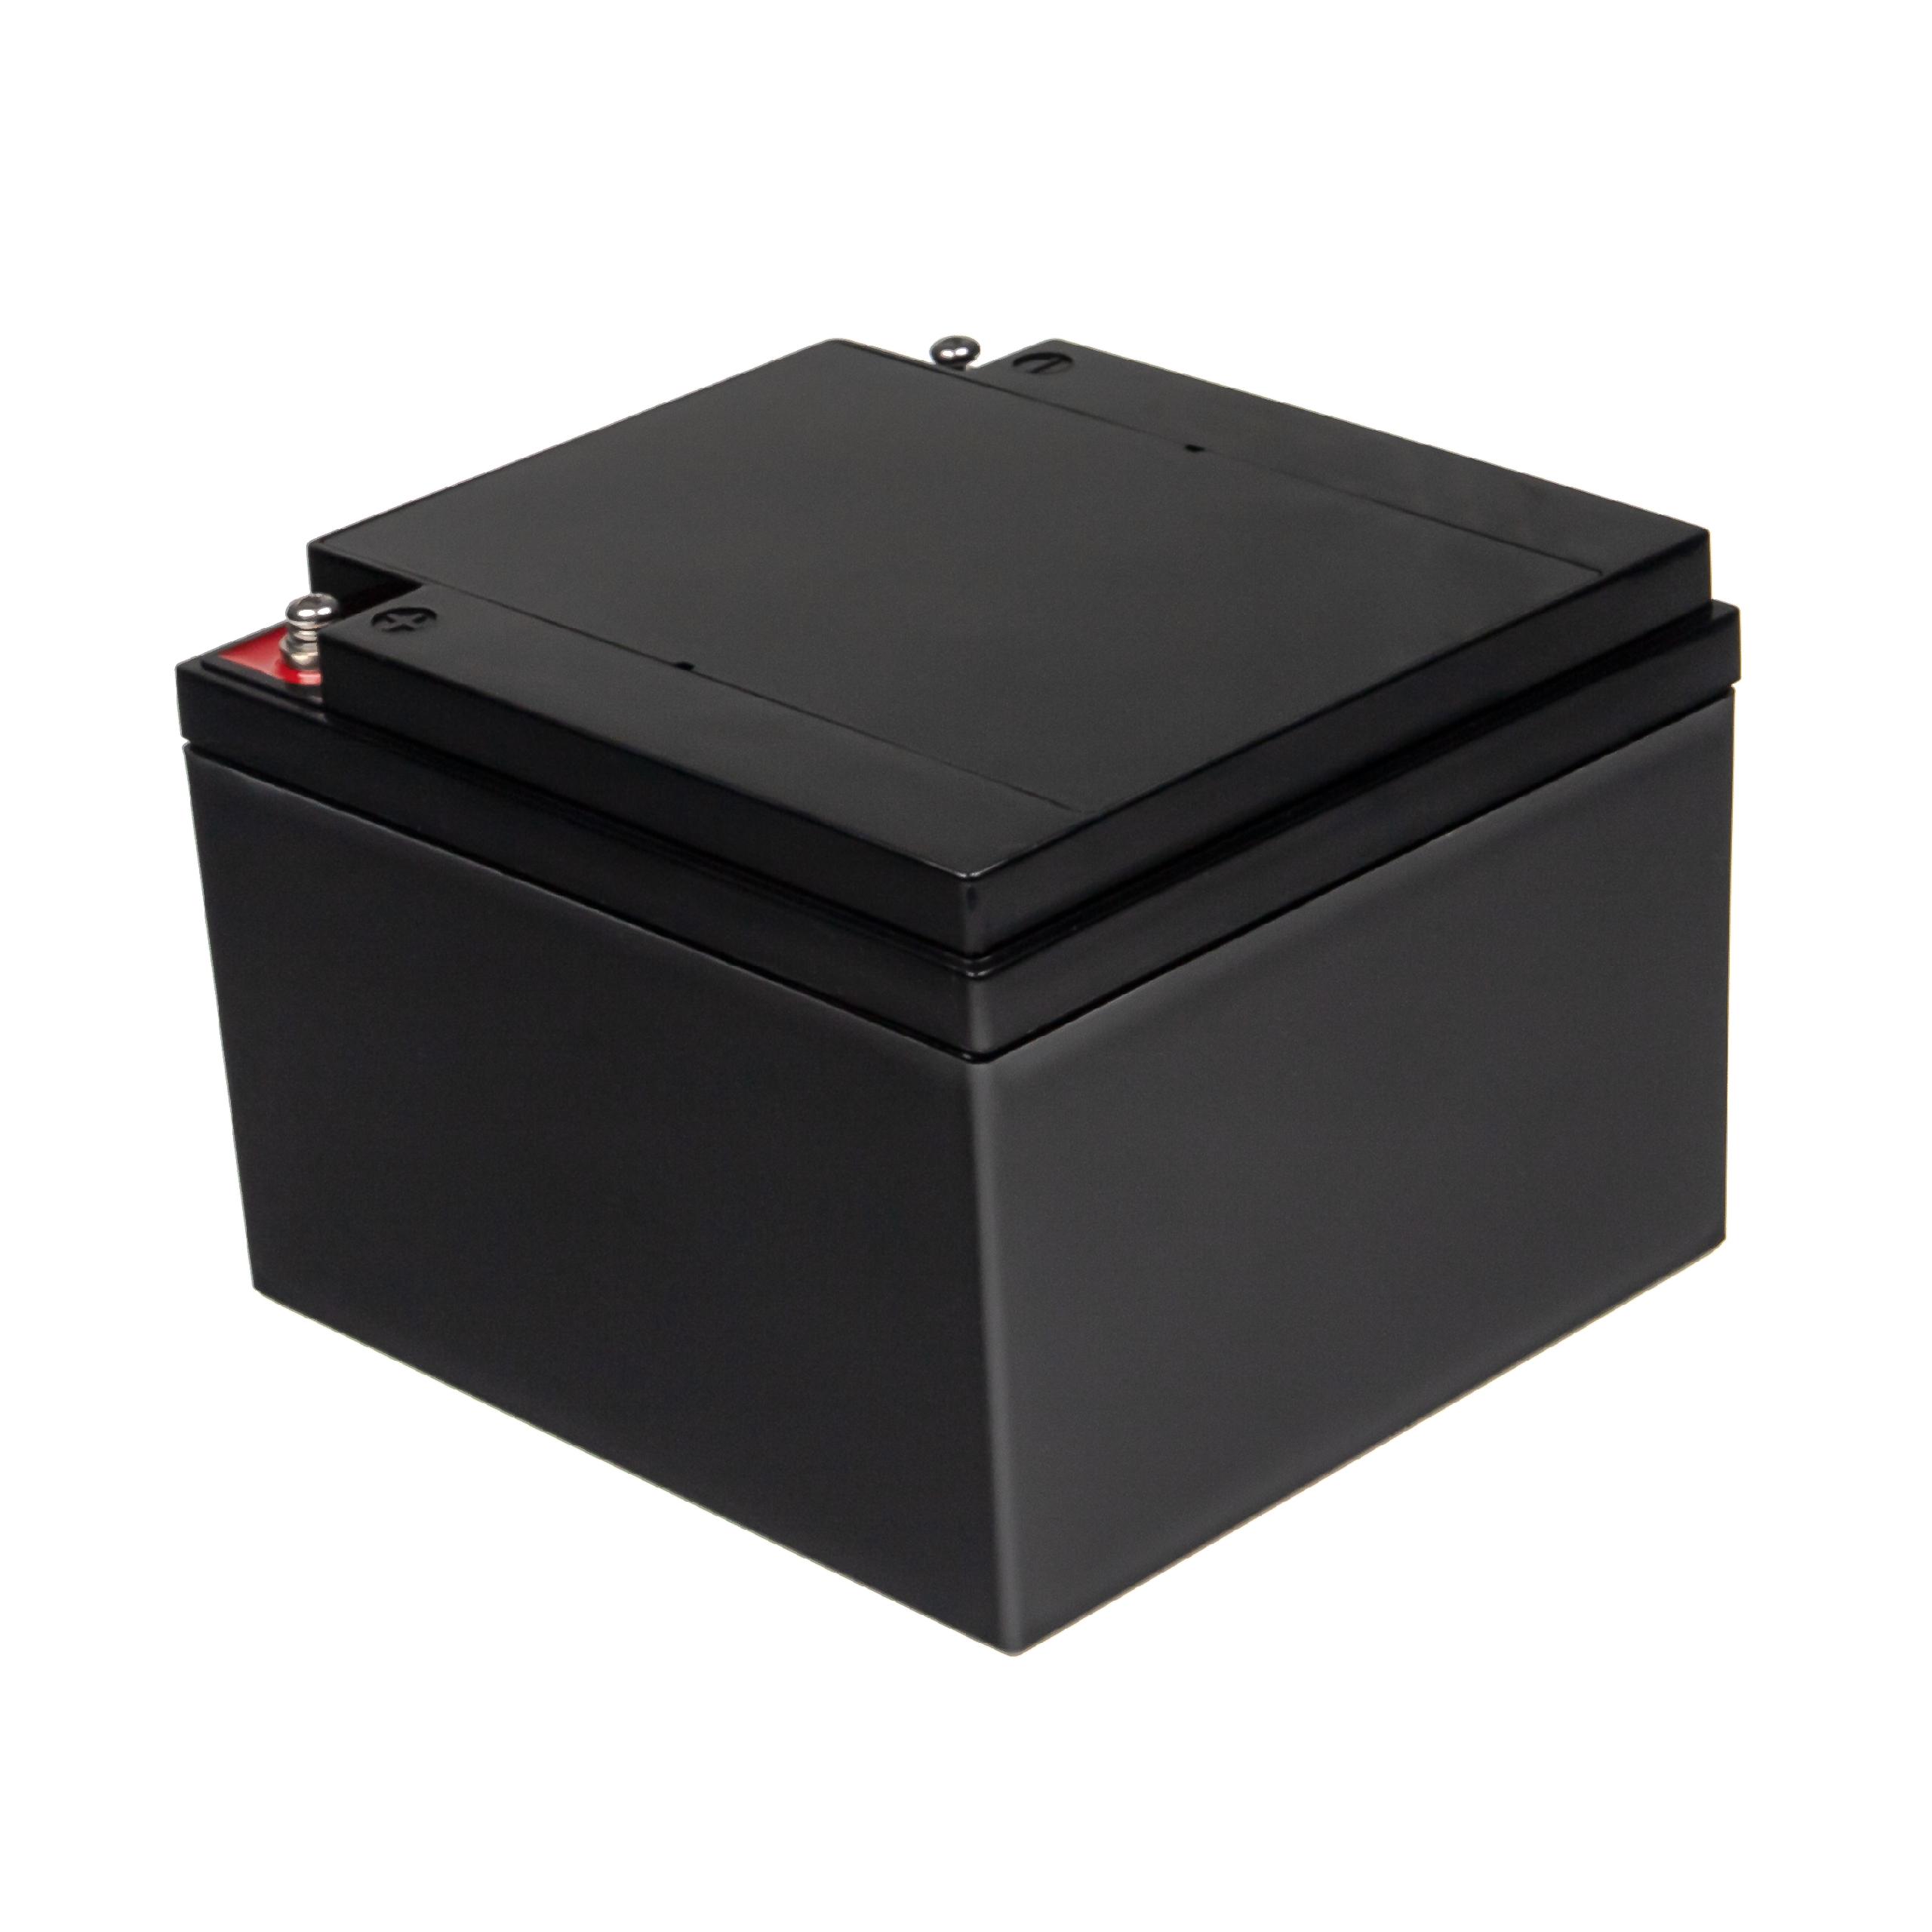 Bordbatterie Akku passend für Wohnmobil, Boot, Solaranlage - 30 Ah 12,8V LiFePO4, 30000mAh, schwarz